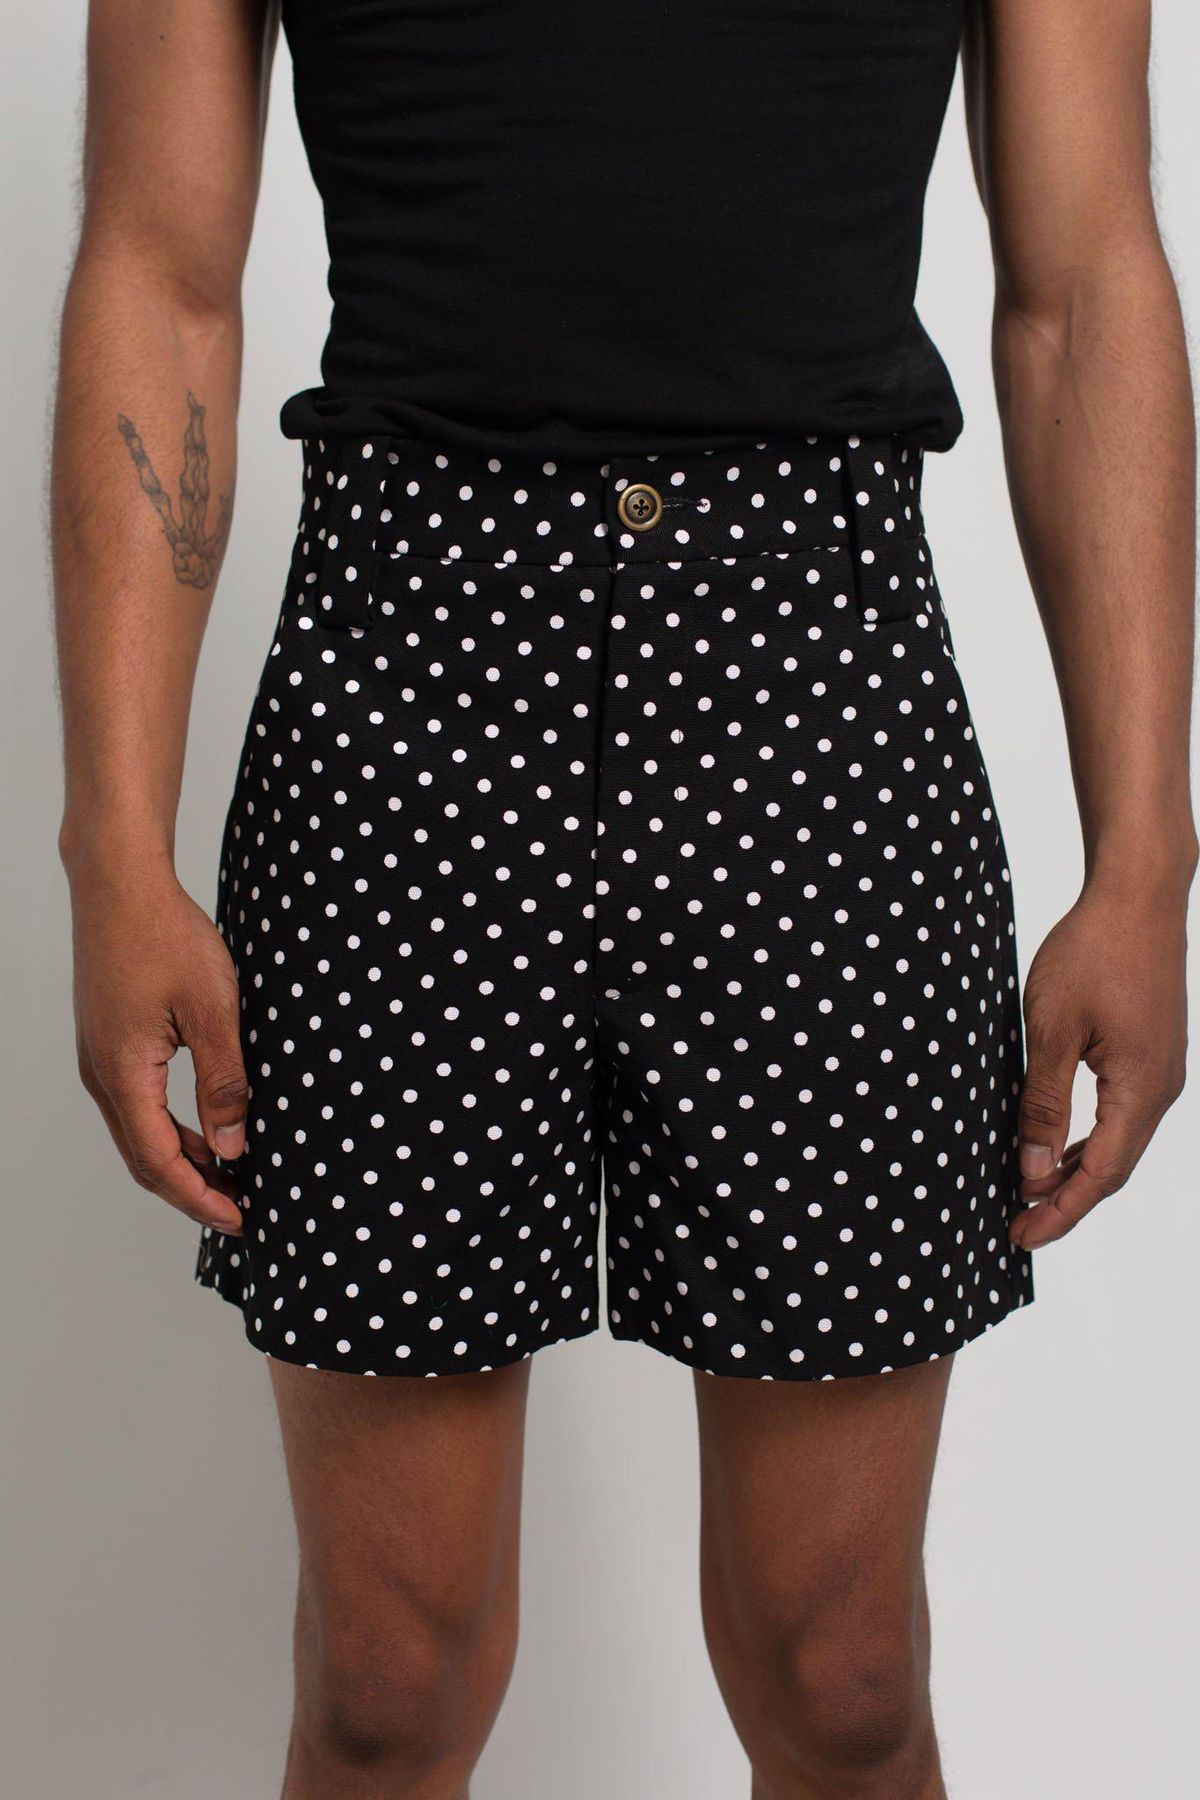 Classic Black and White Polka Dot Maritime Shorts